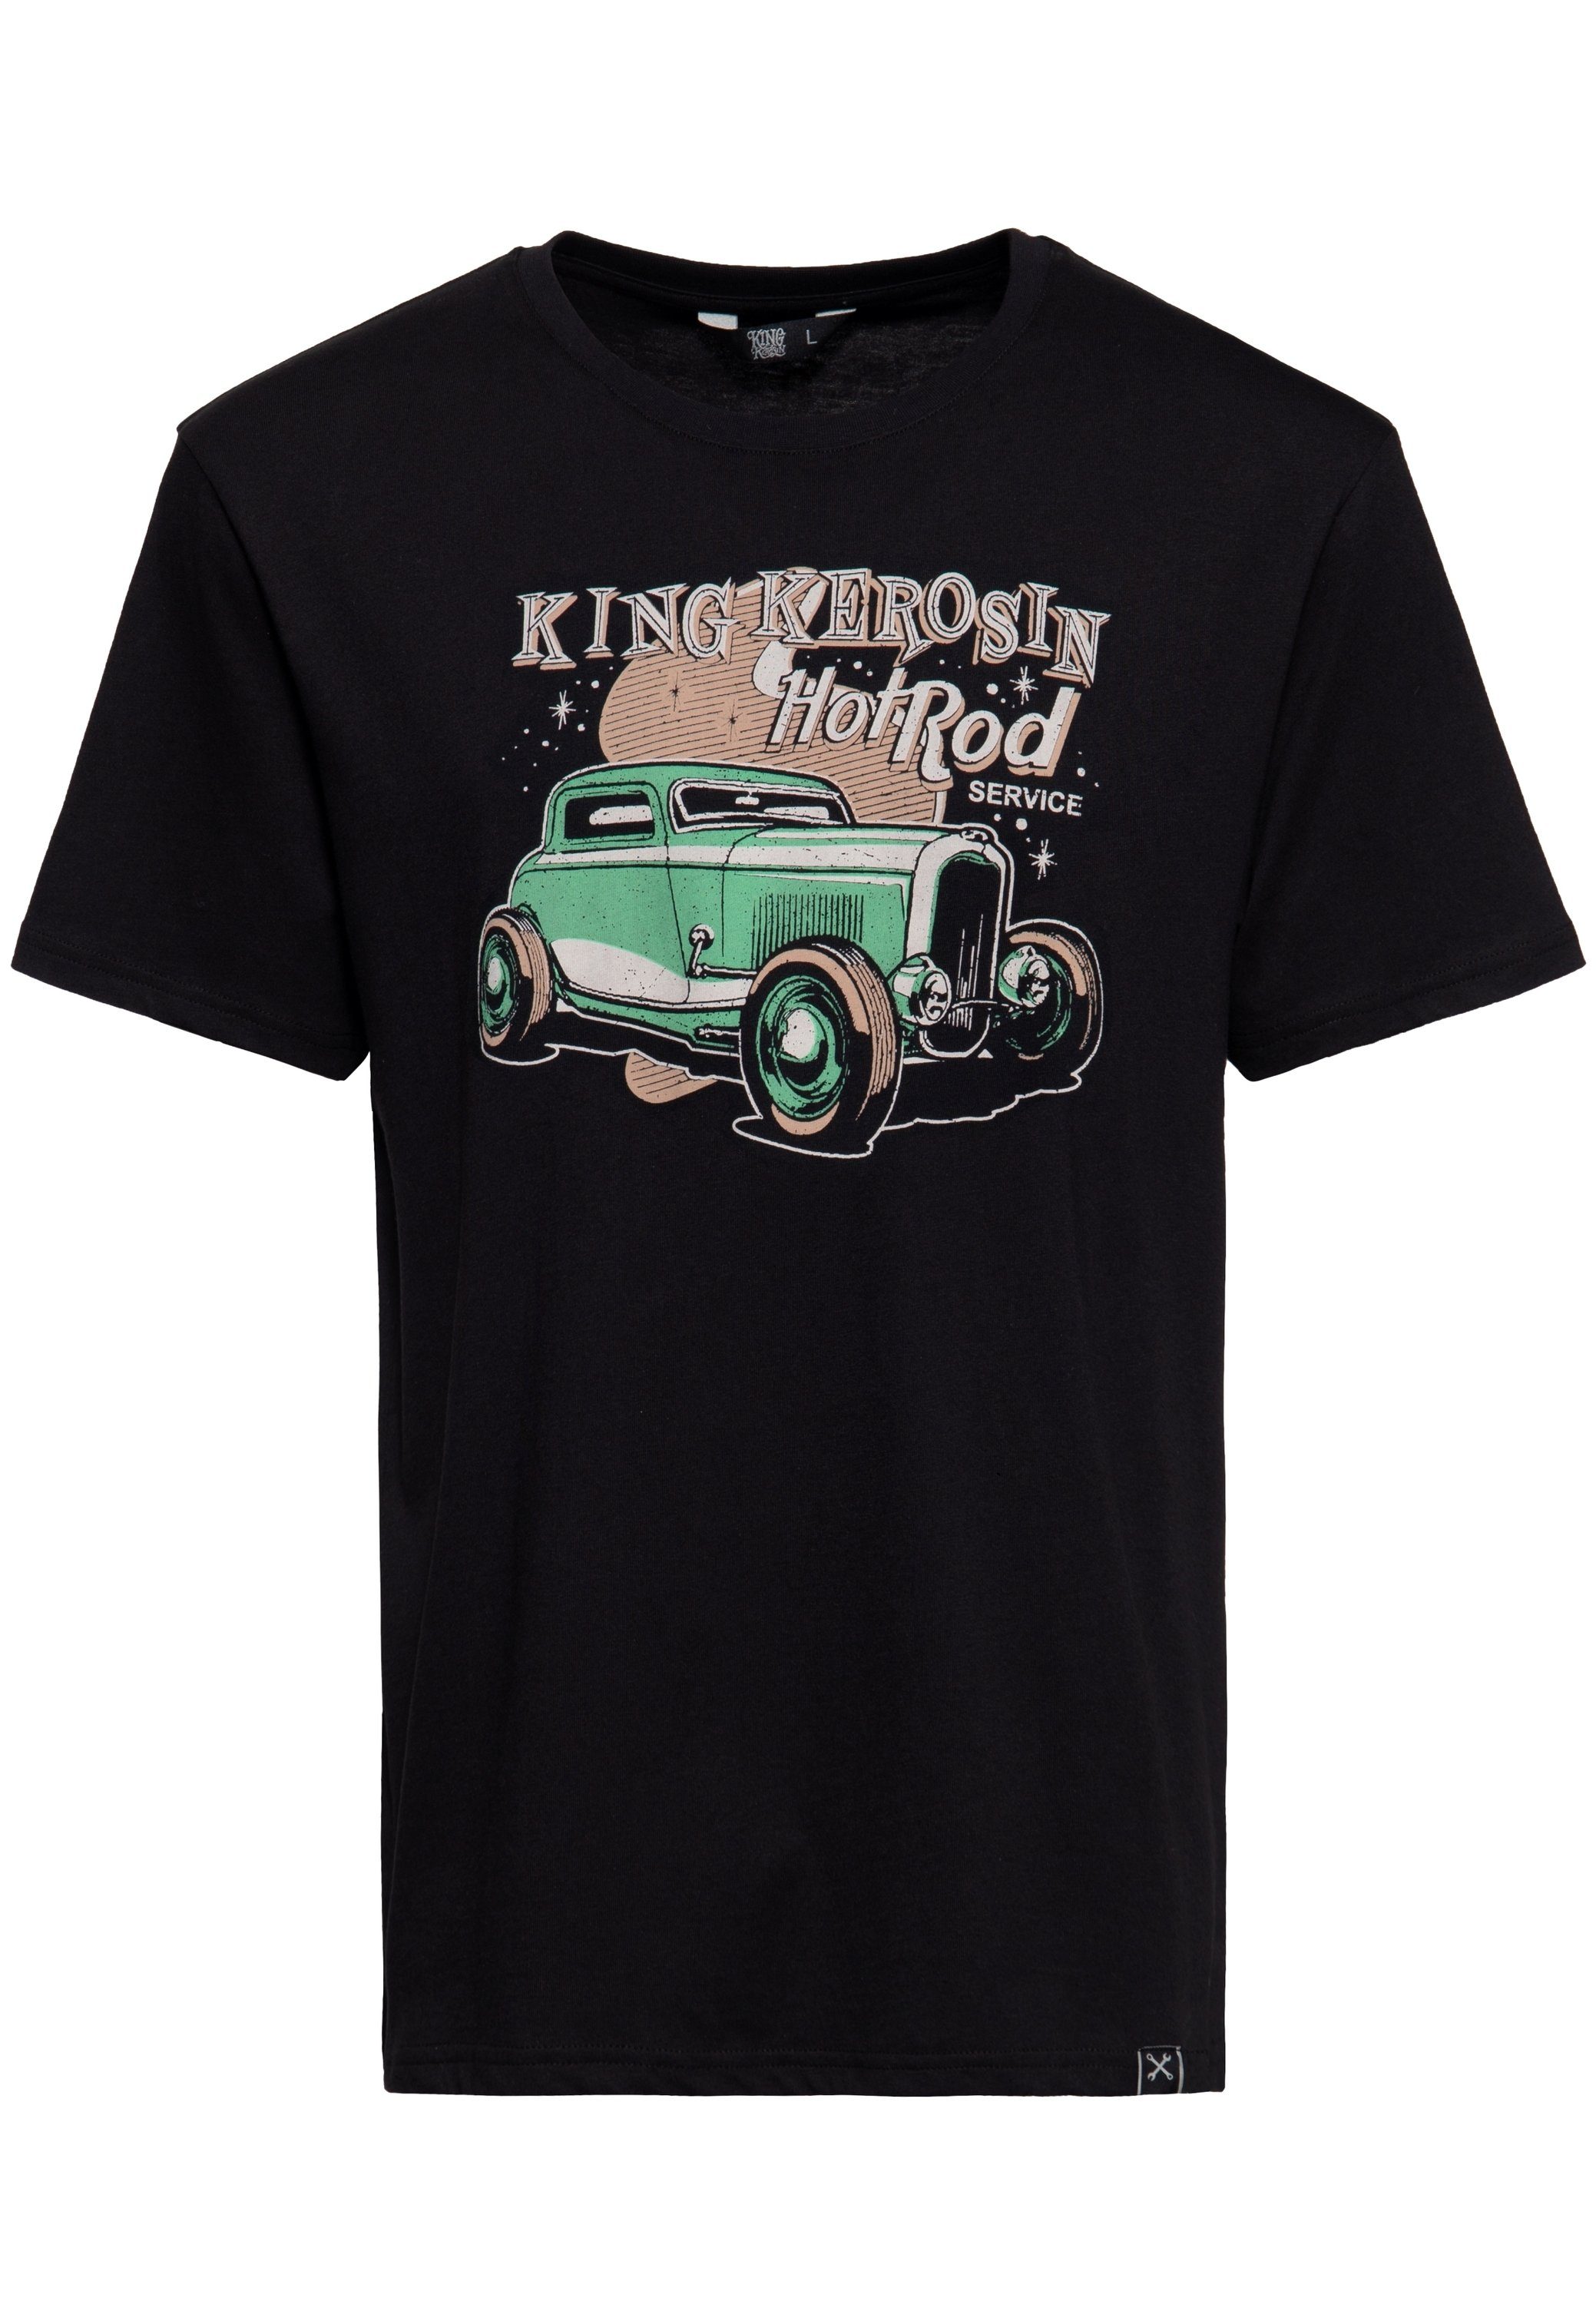 KingKerosin Print-Shirt Hotrod Service mit Retro-Artwork Print schwarz